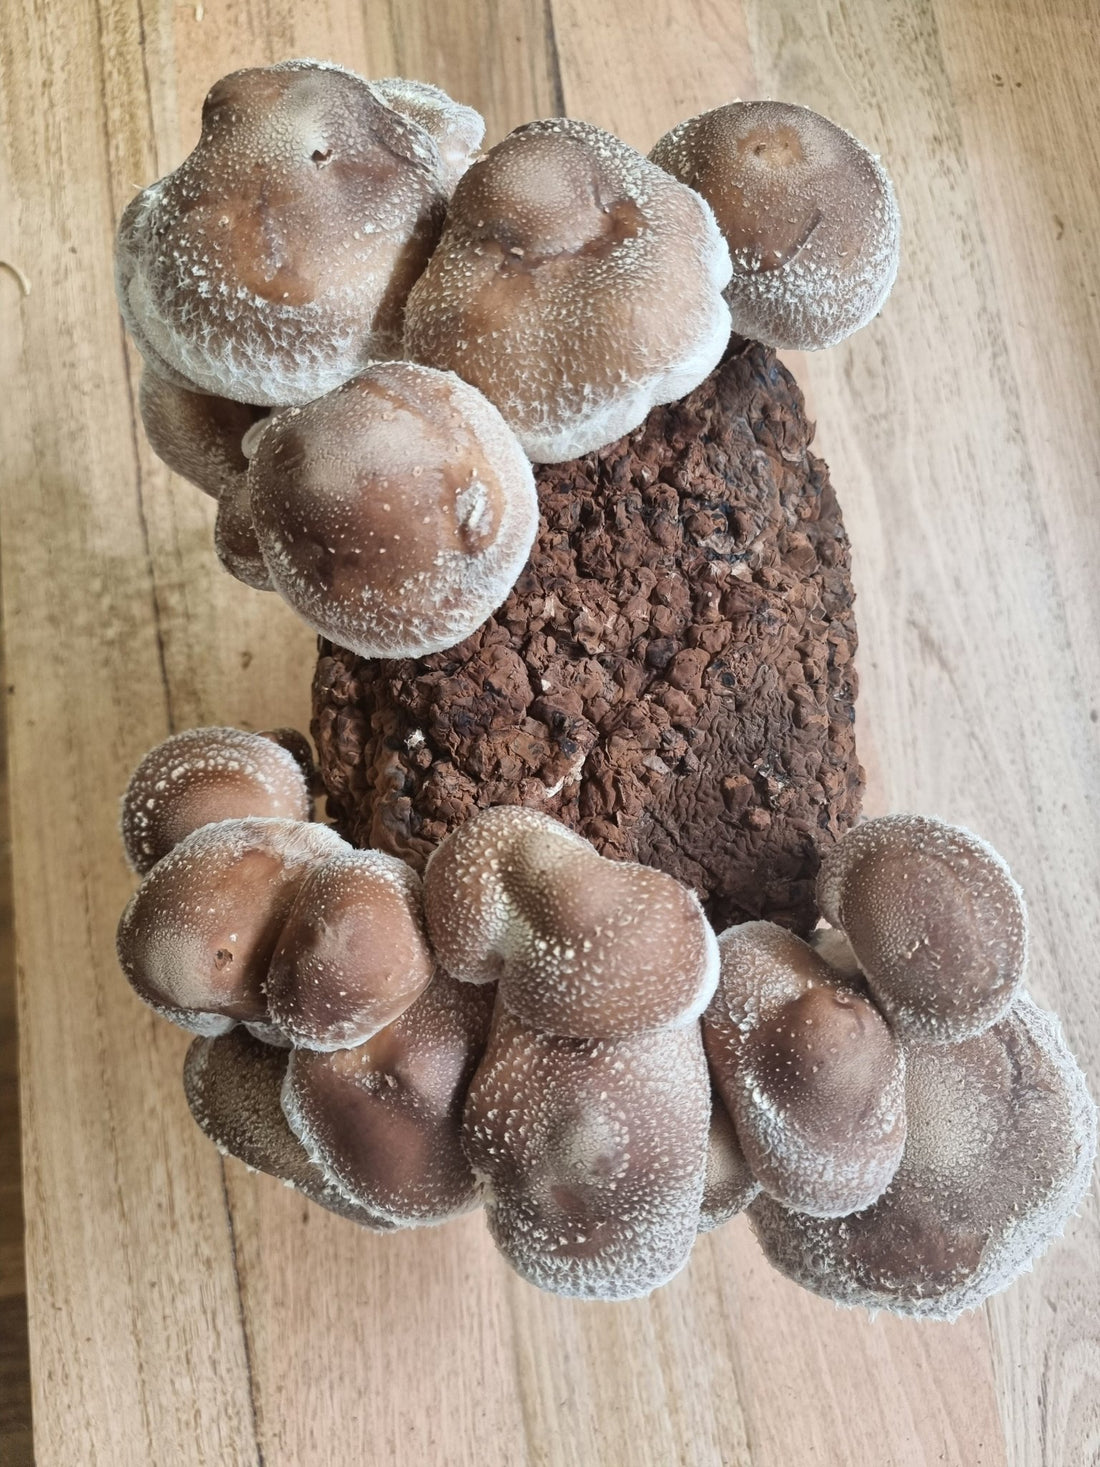 4 Shiitake Mushroom Side Effects You Must Know - Xotic Mushrooms